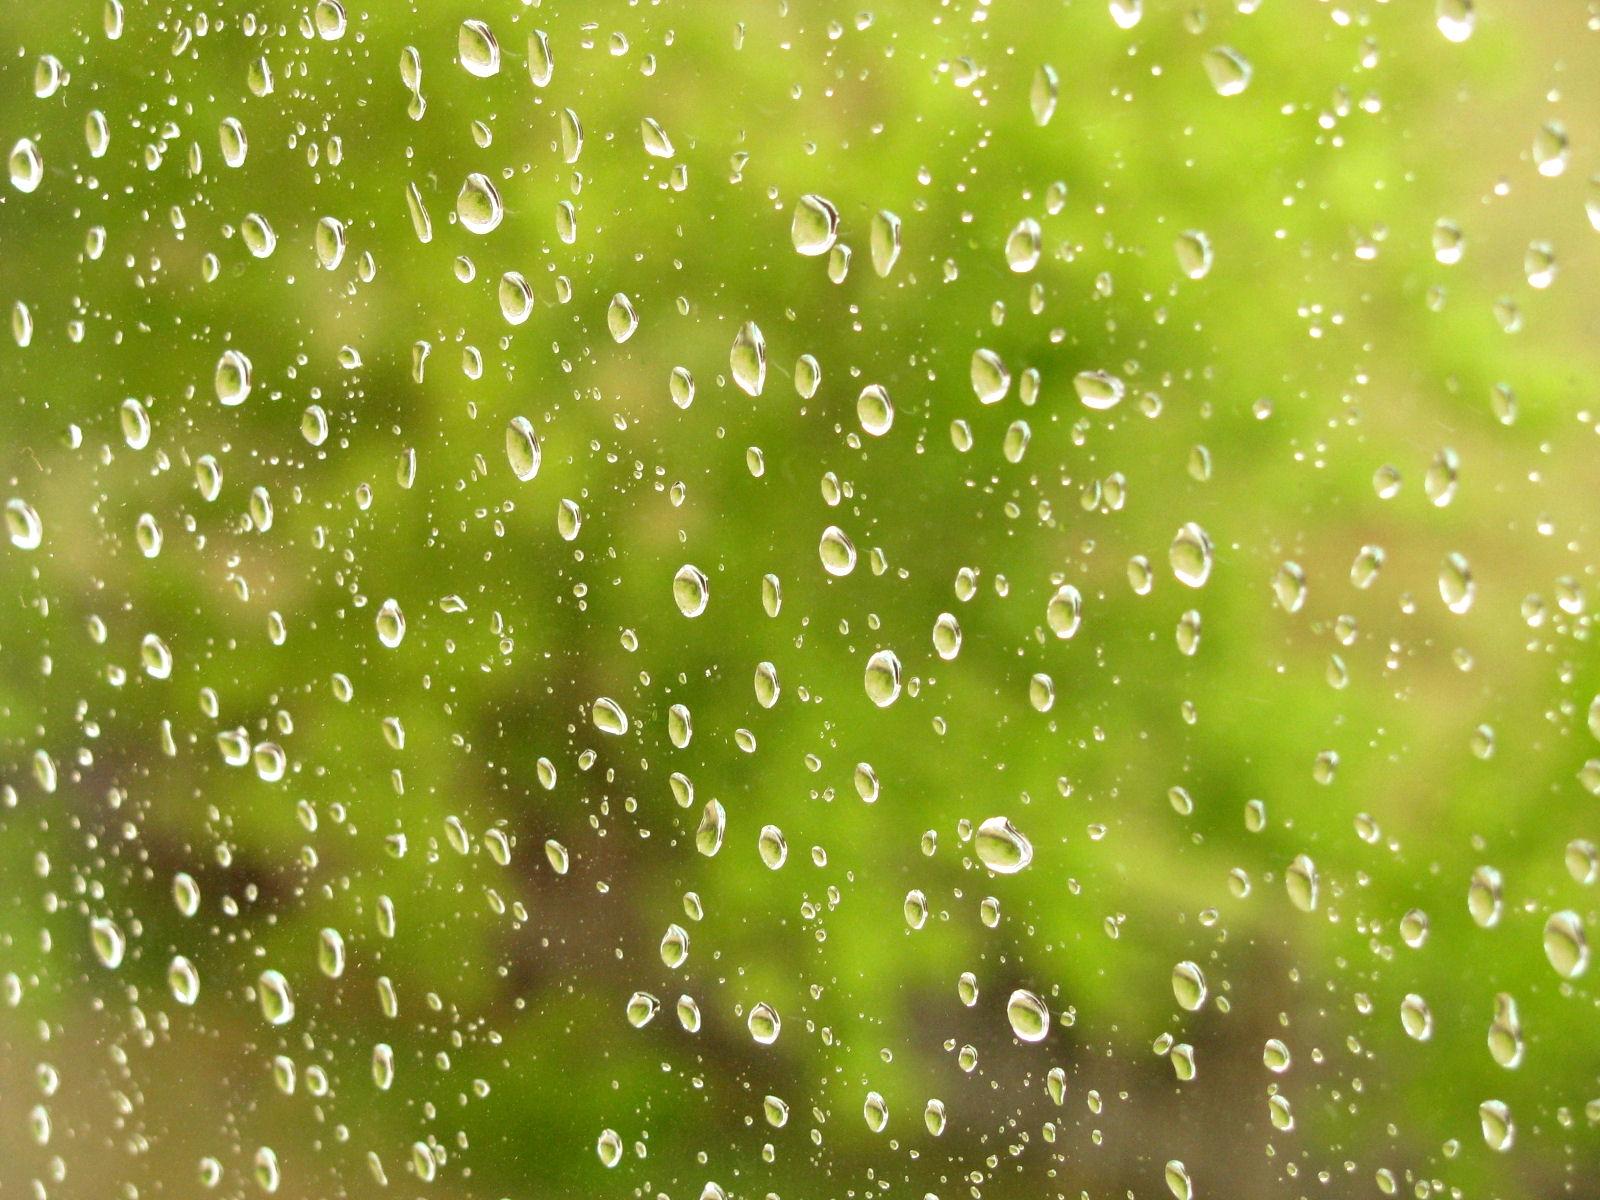 deszcz-szyba-zielen-krople-woda-s.jpg